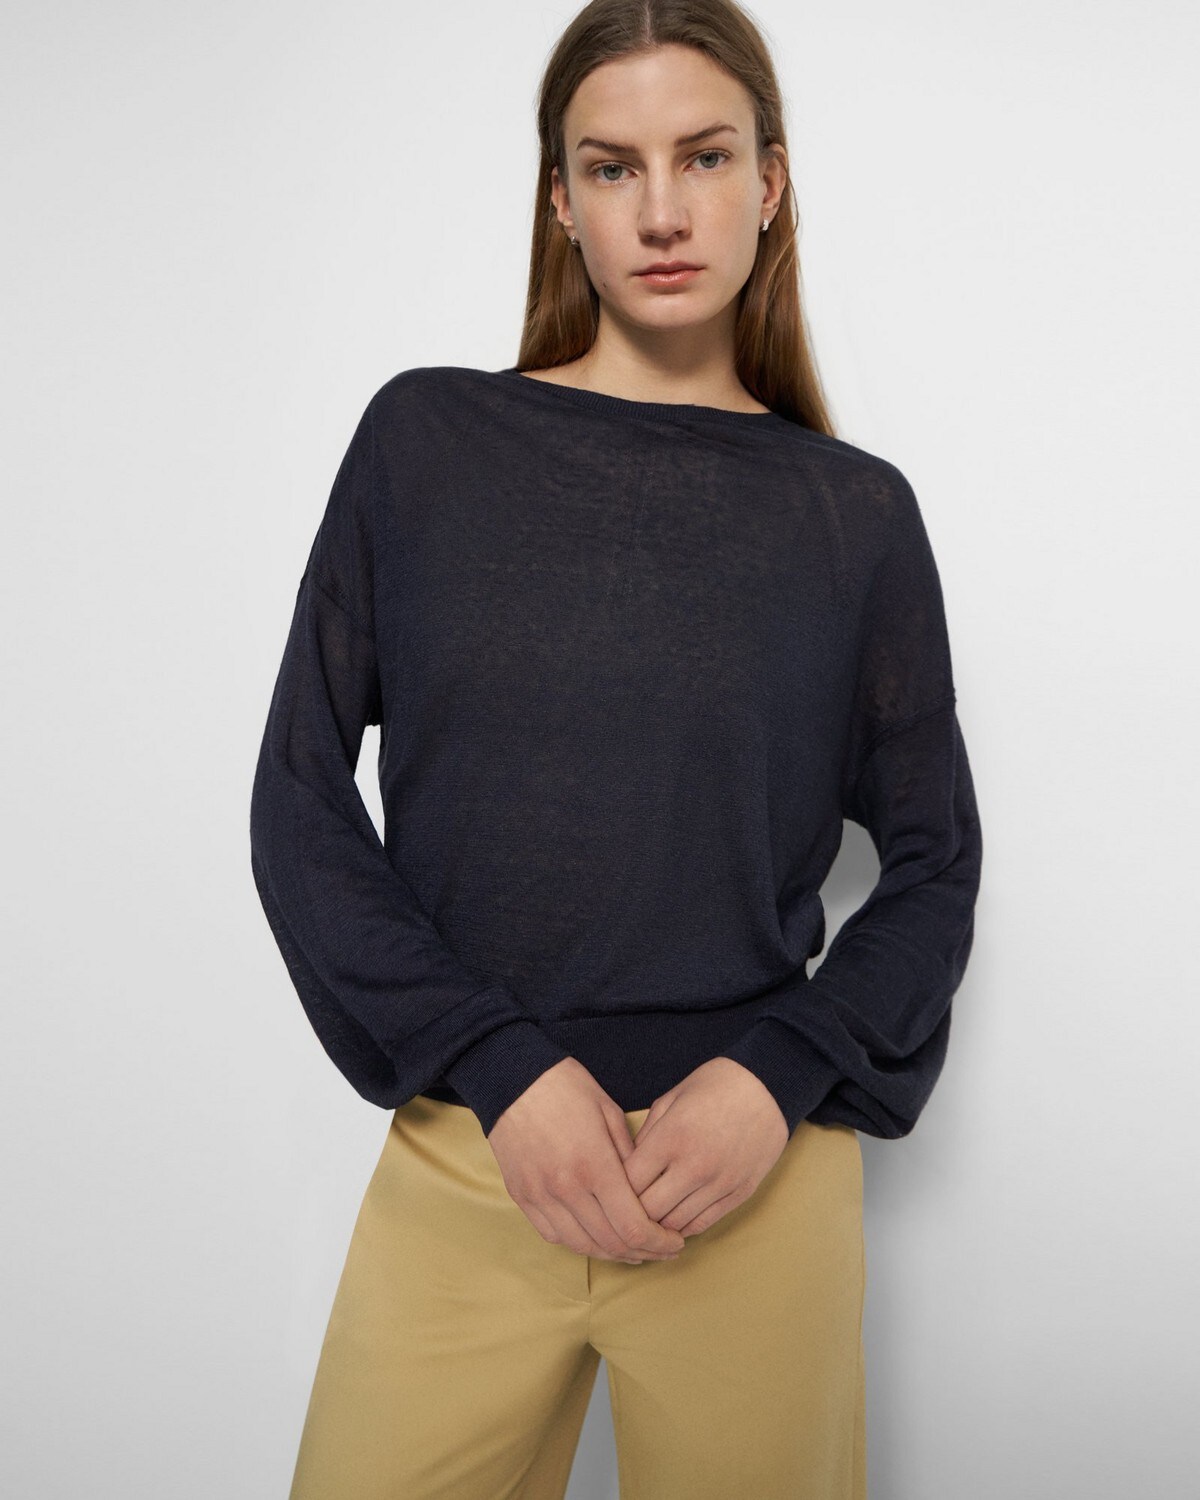 Volume Sleeve Sweater in Knit Linen